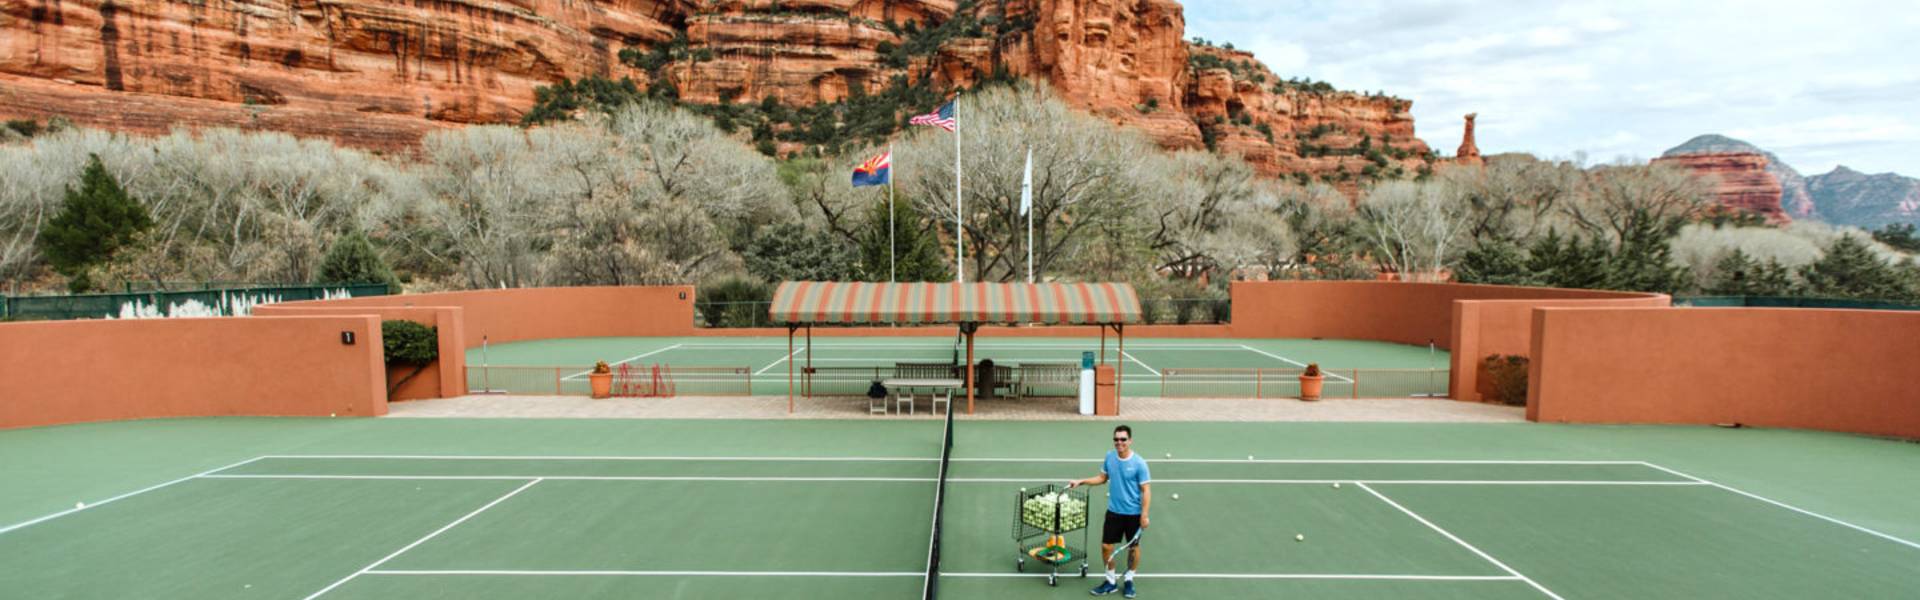 Tennis court at the Enchantment Resort in Sedona, Arizona